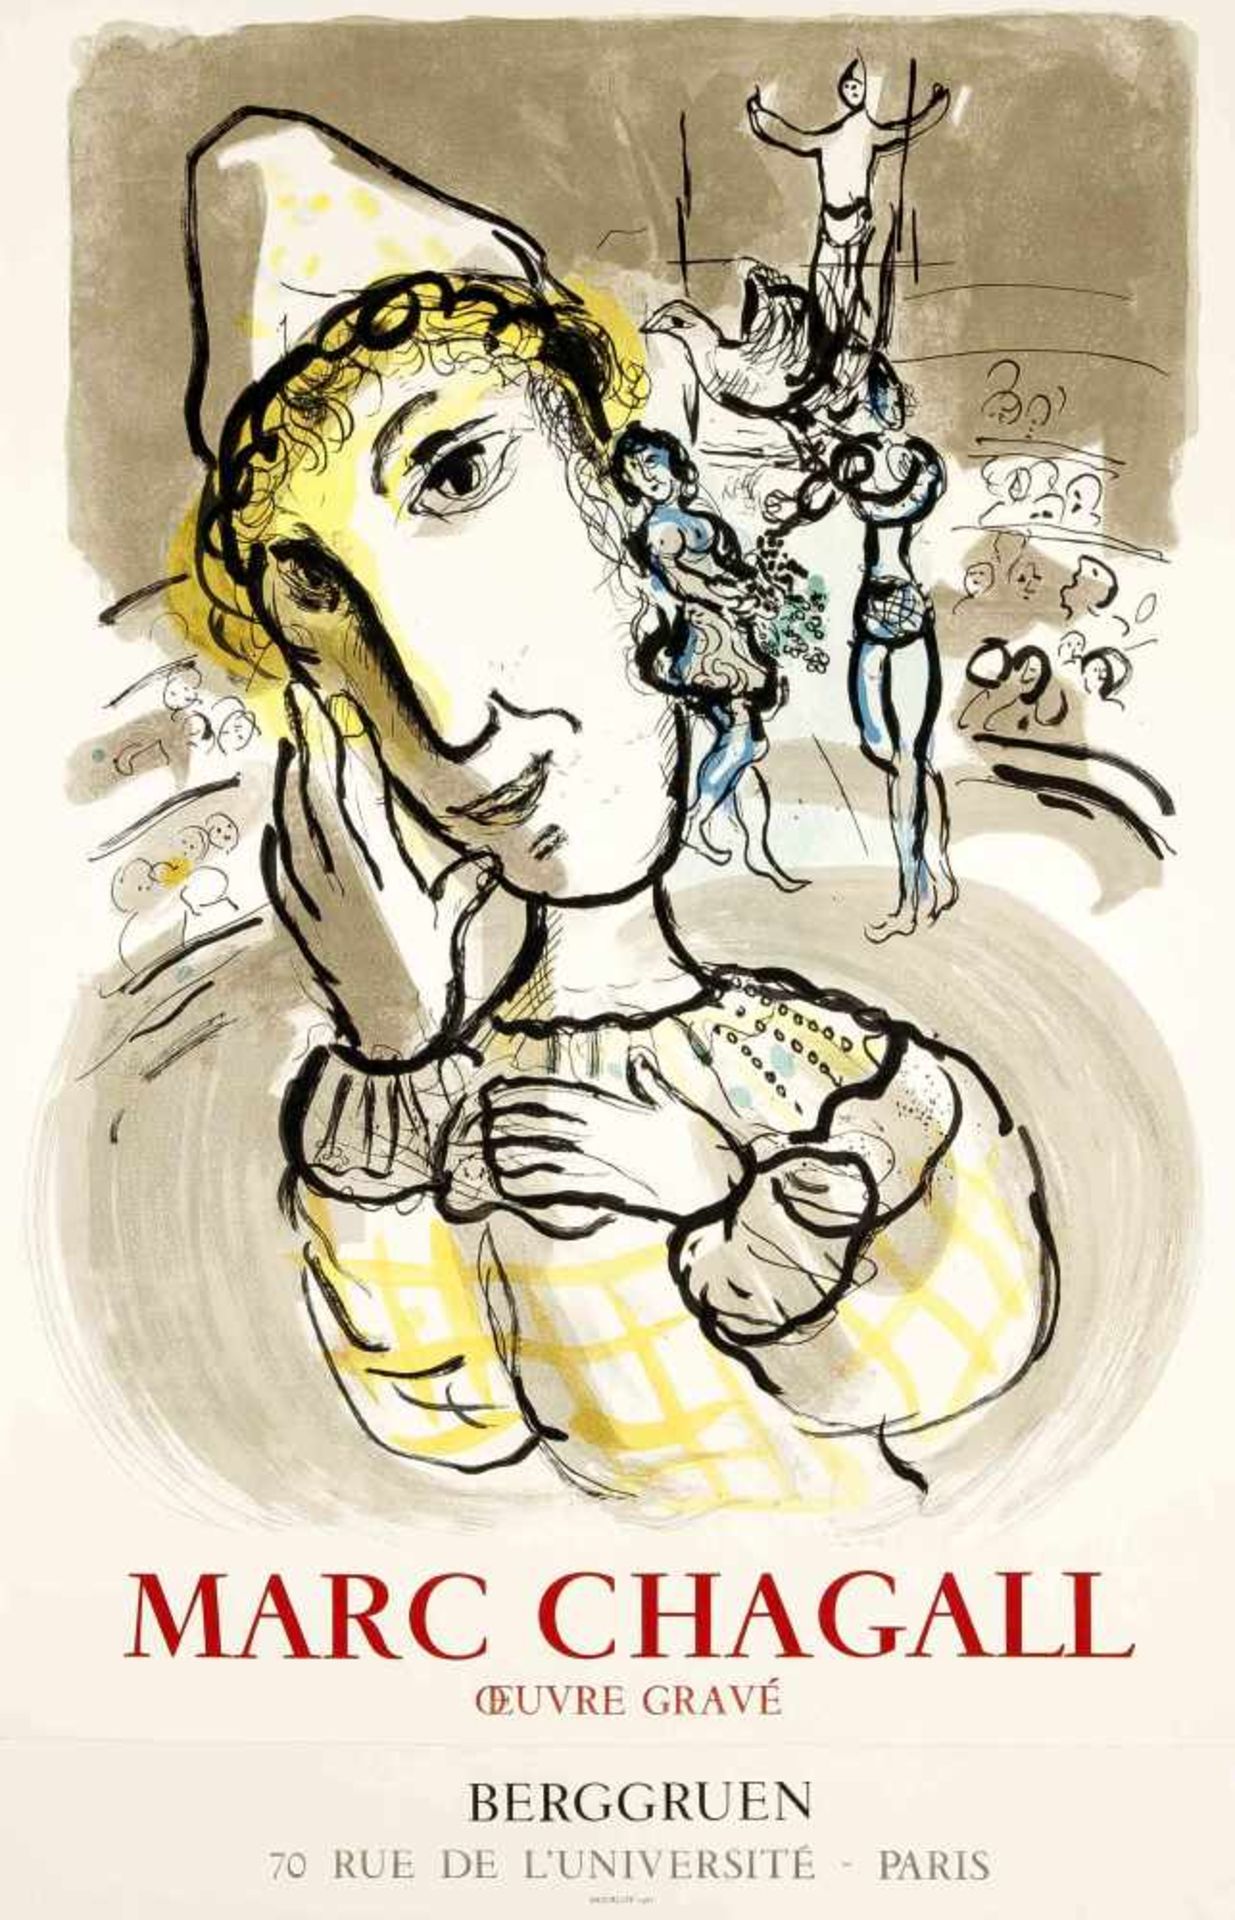 Marc Chagall (1887-1985), "Le Cirque au Clown jaune" (Oeuvre gravé), Ausstellungsplakatder Galerie